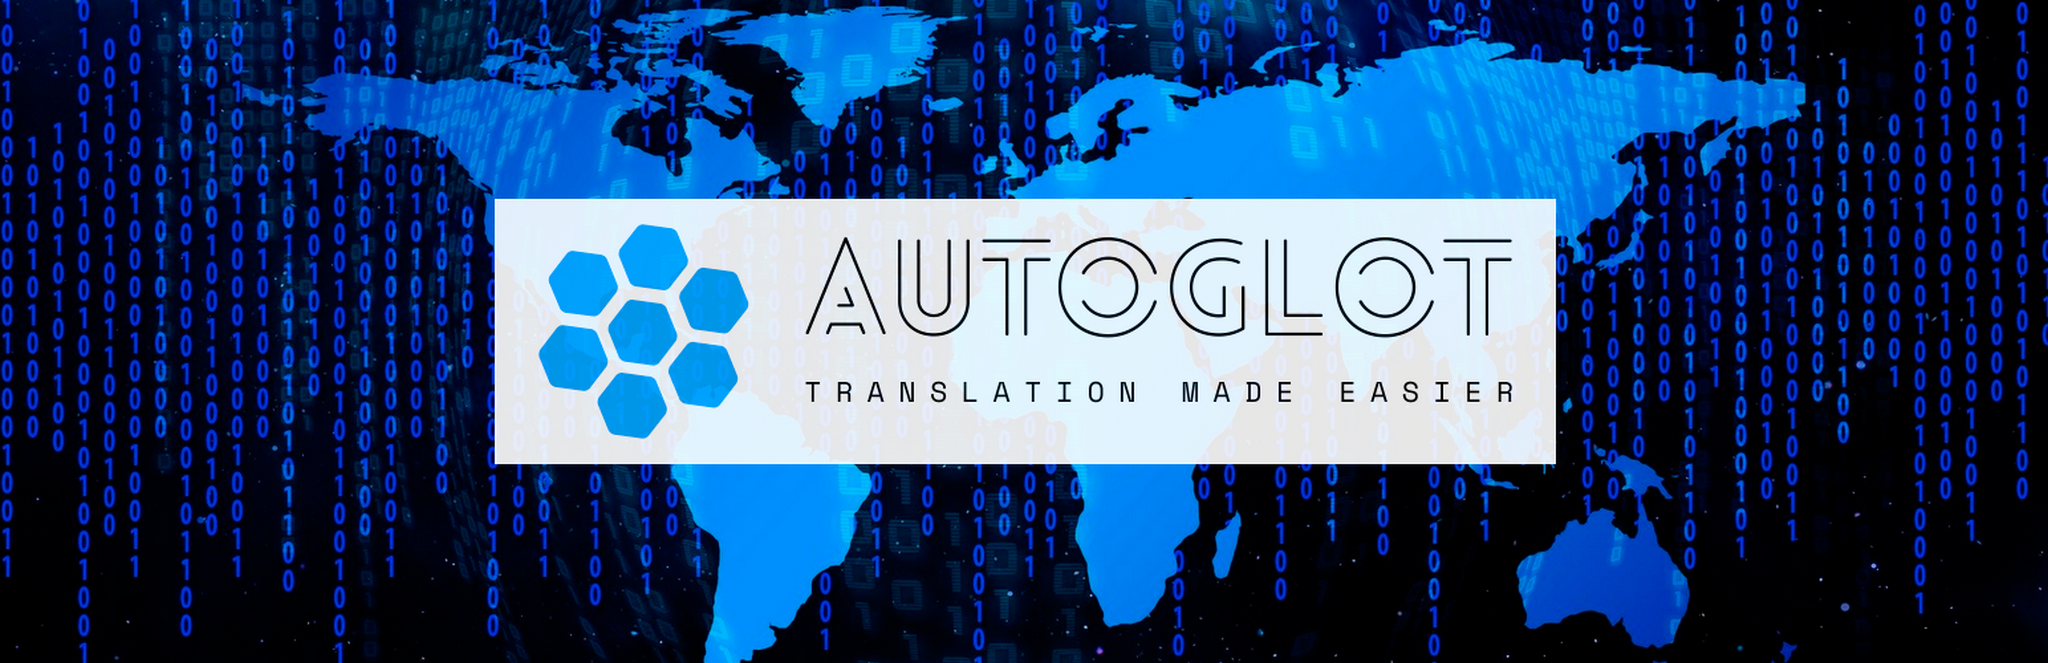 Autoglot Landing page